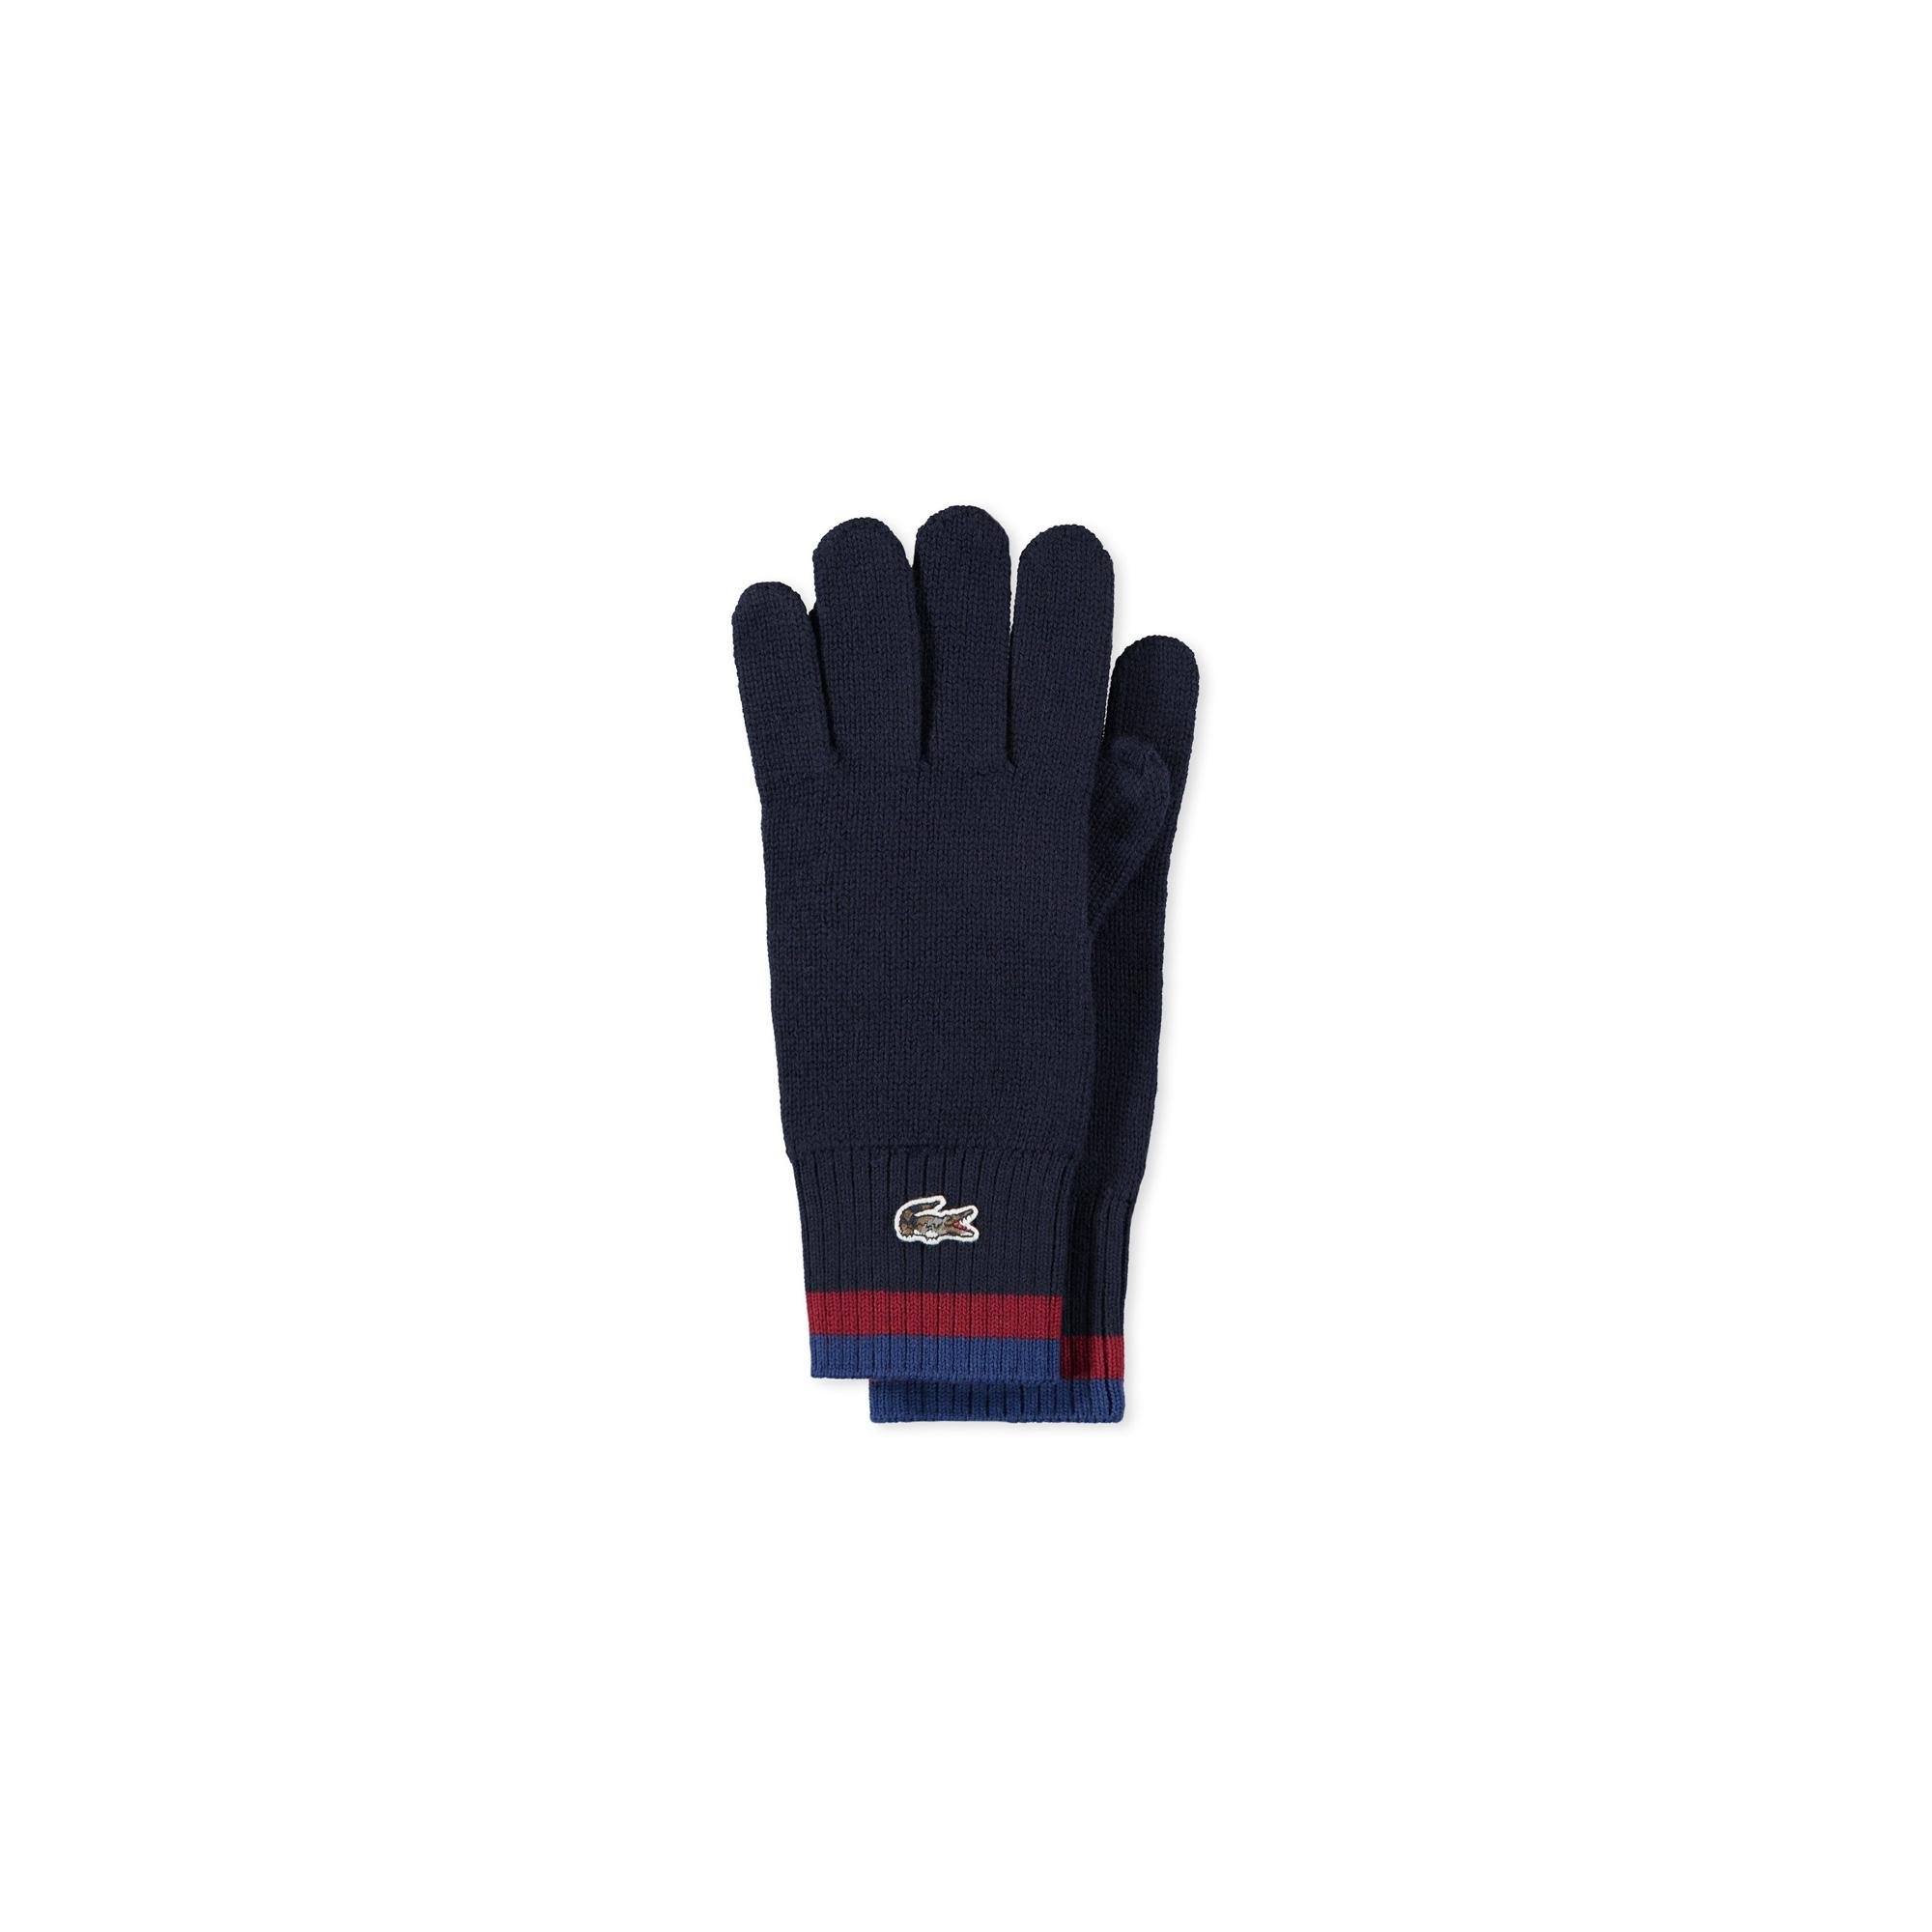 Lacoste Men's Gloves